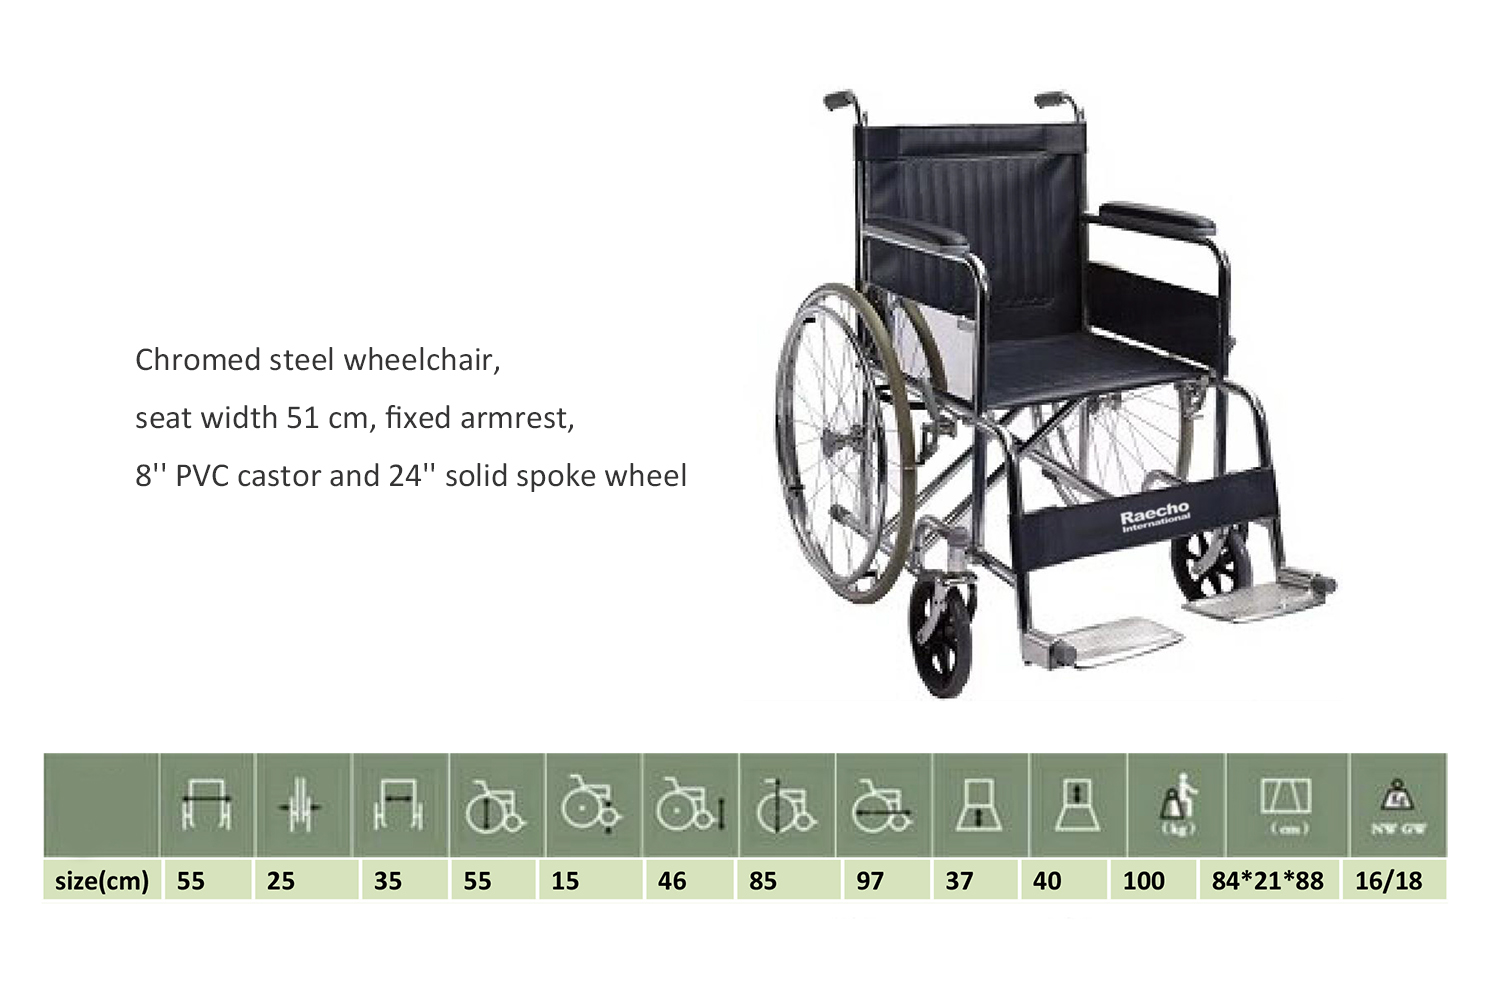 Raecho-Chromed steel wheelchair-1.jpg